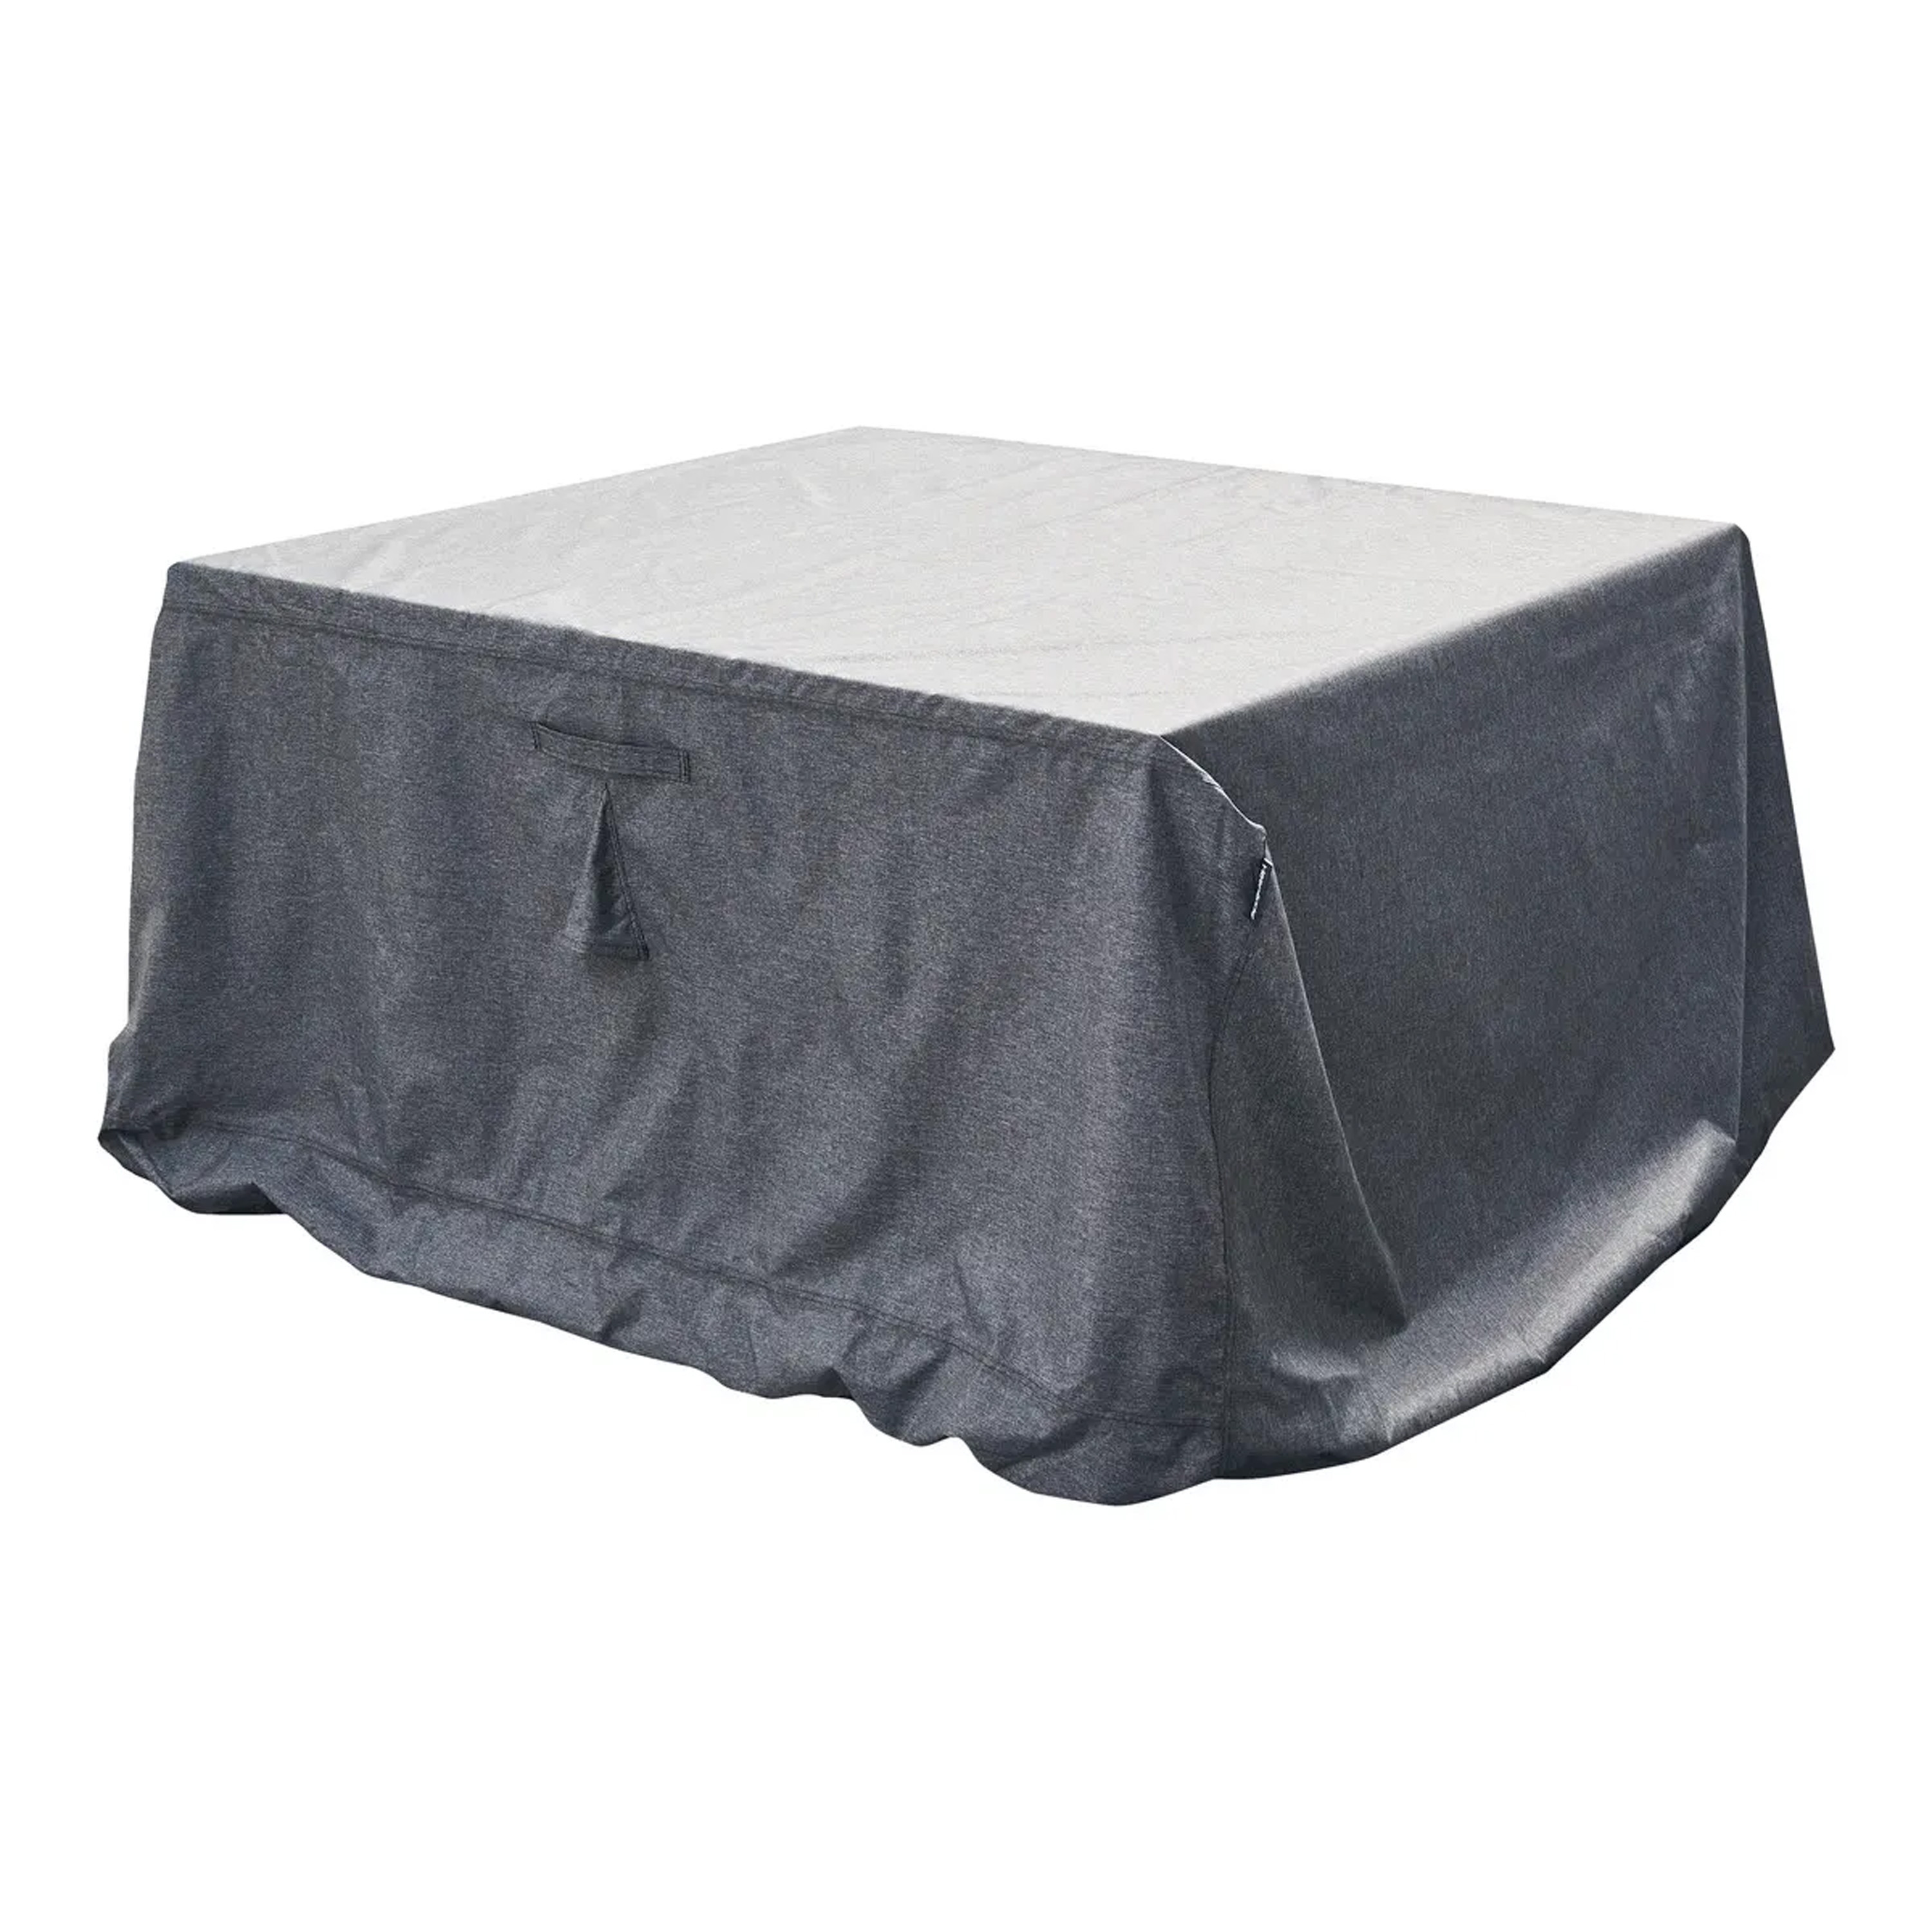 hesperide Hambo Schutzhülle für Tisch rechteckig l - 265 x 125 x 80 cm - Hespéride - Grau